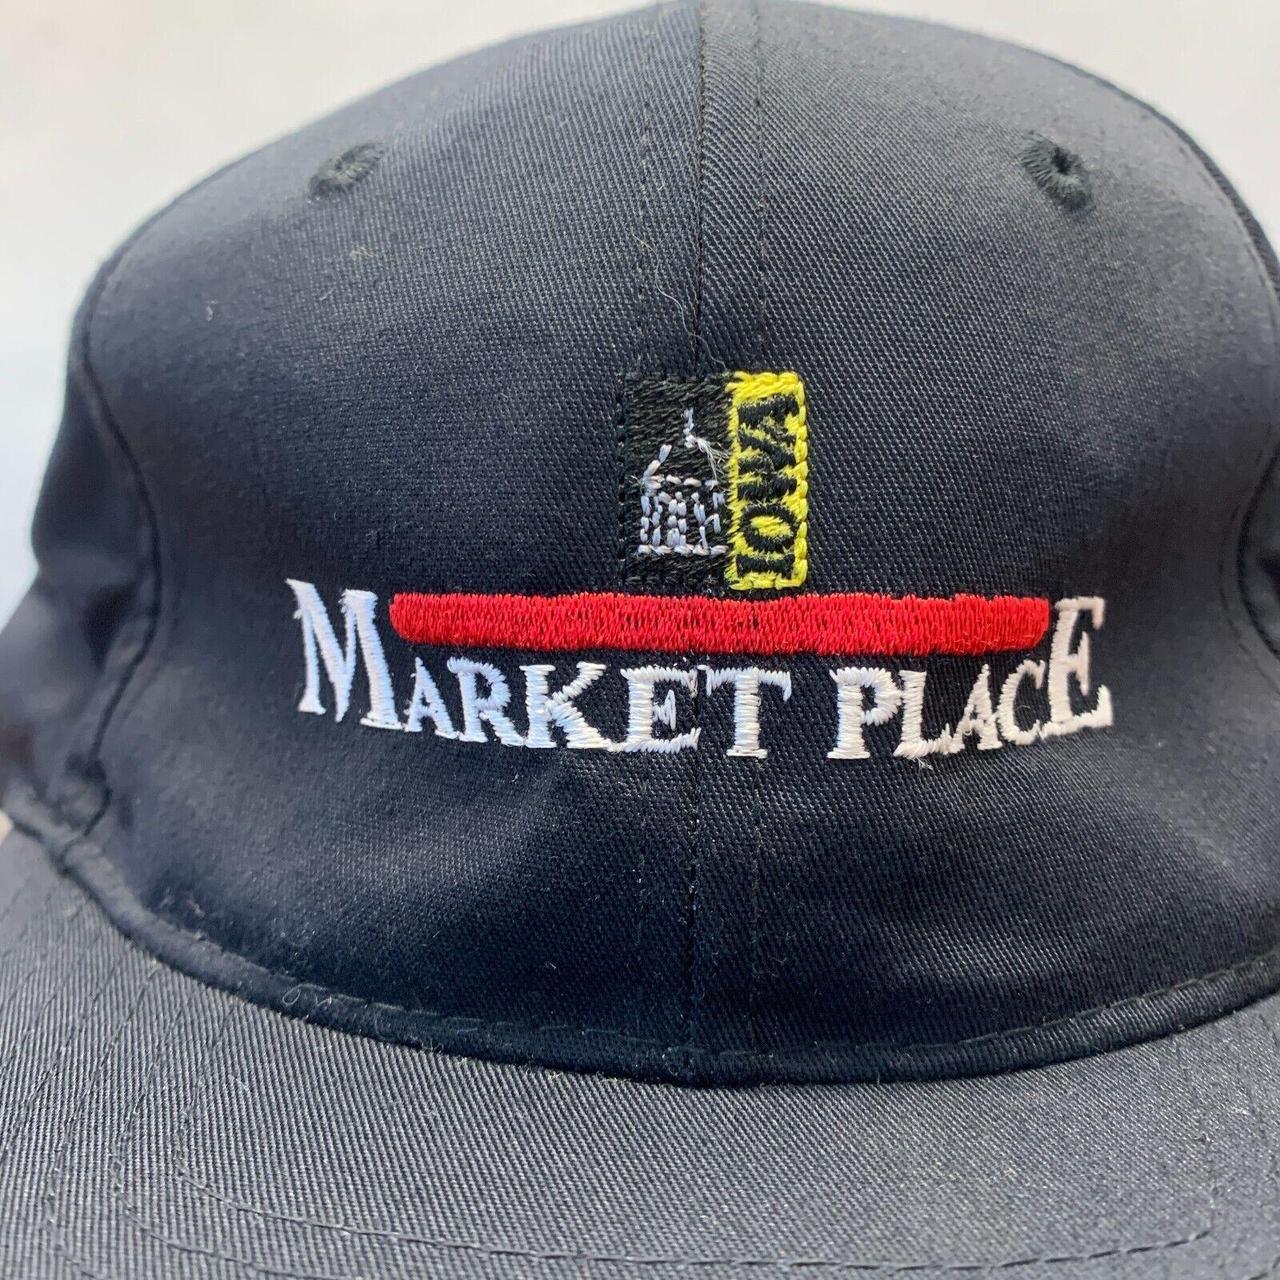 Market Men's Black Hat (2)